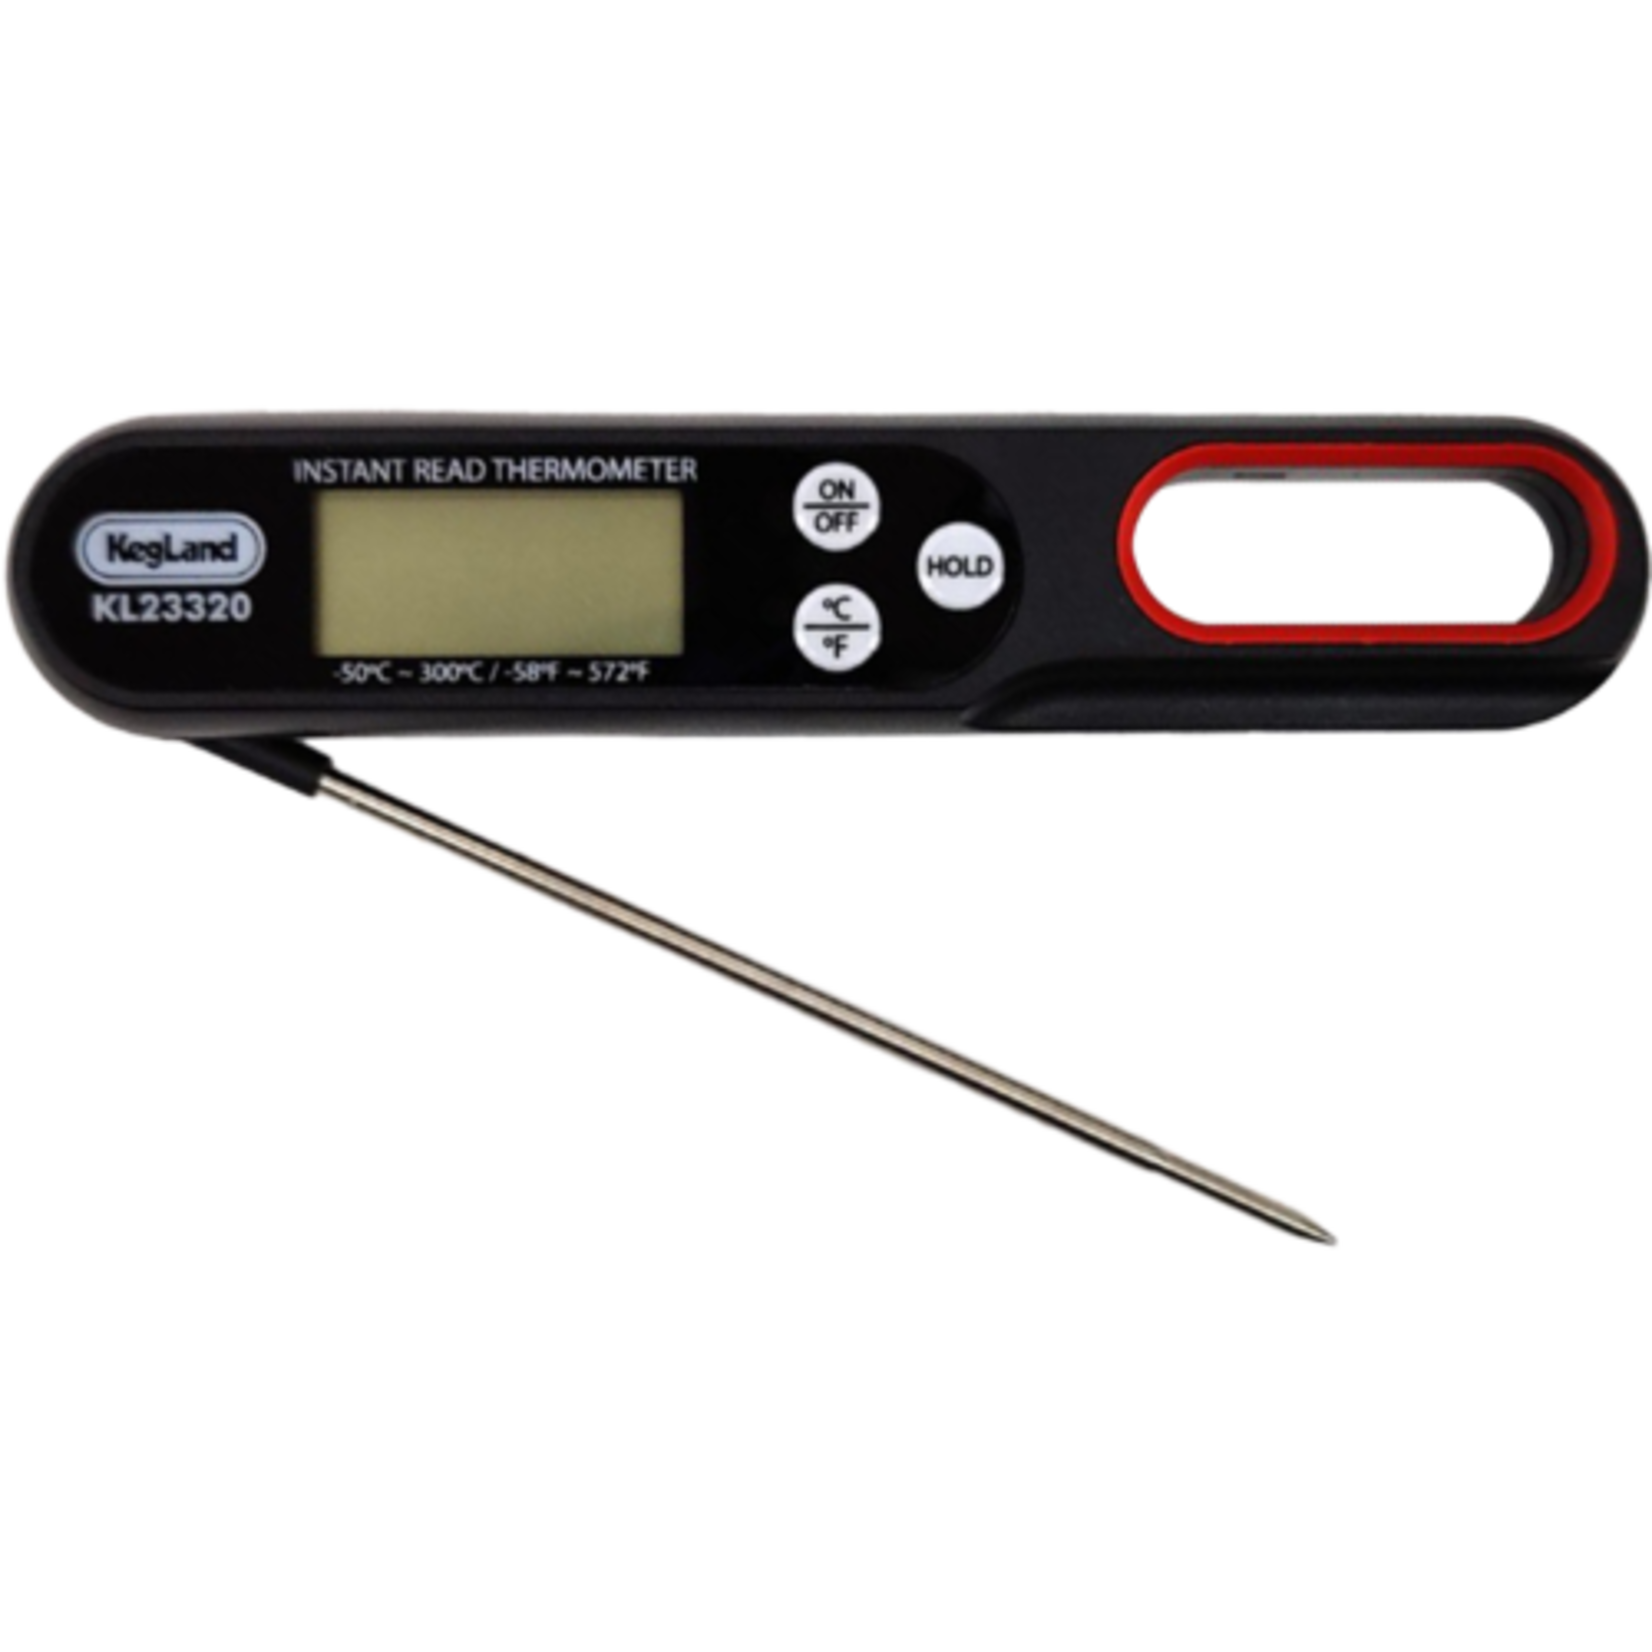 Kegland Digital Thermometer w/ Folding Probe